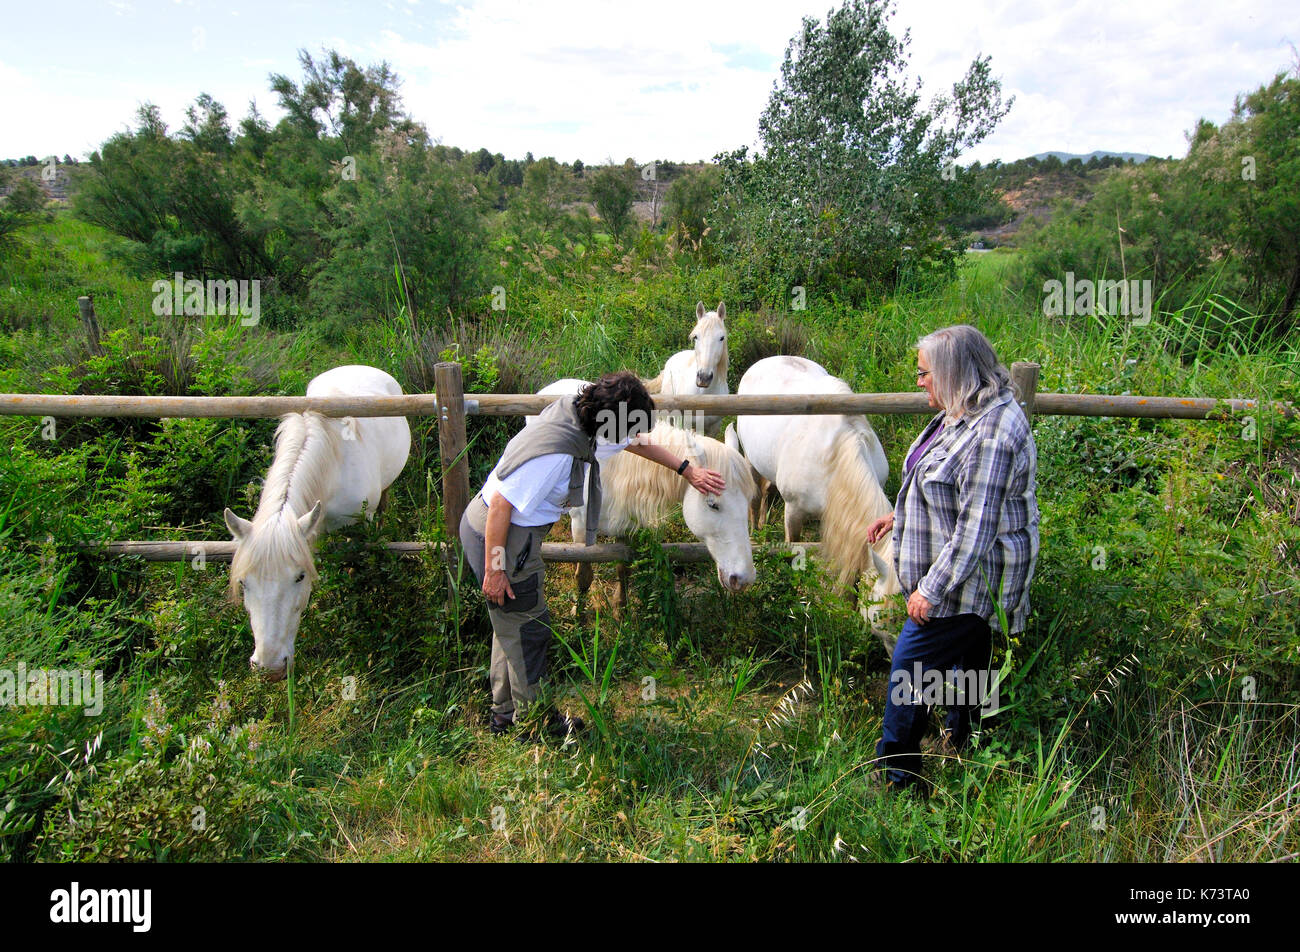 Girls with White horses Stock Photo